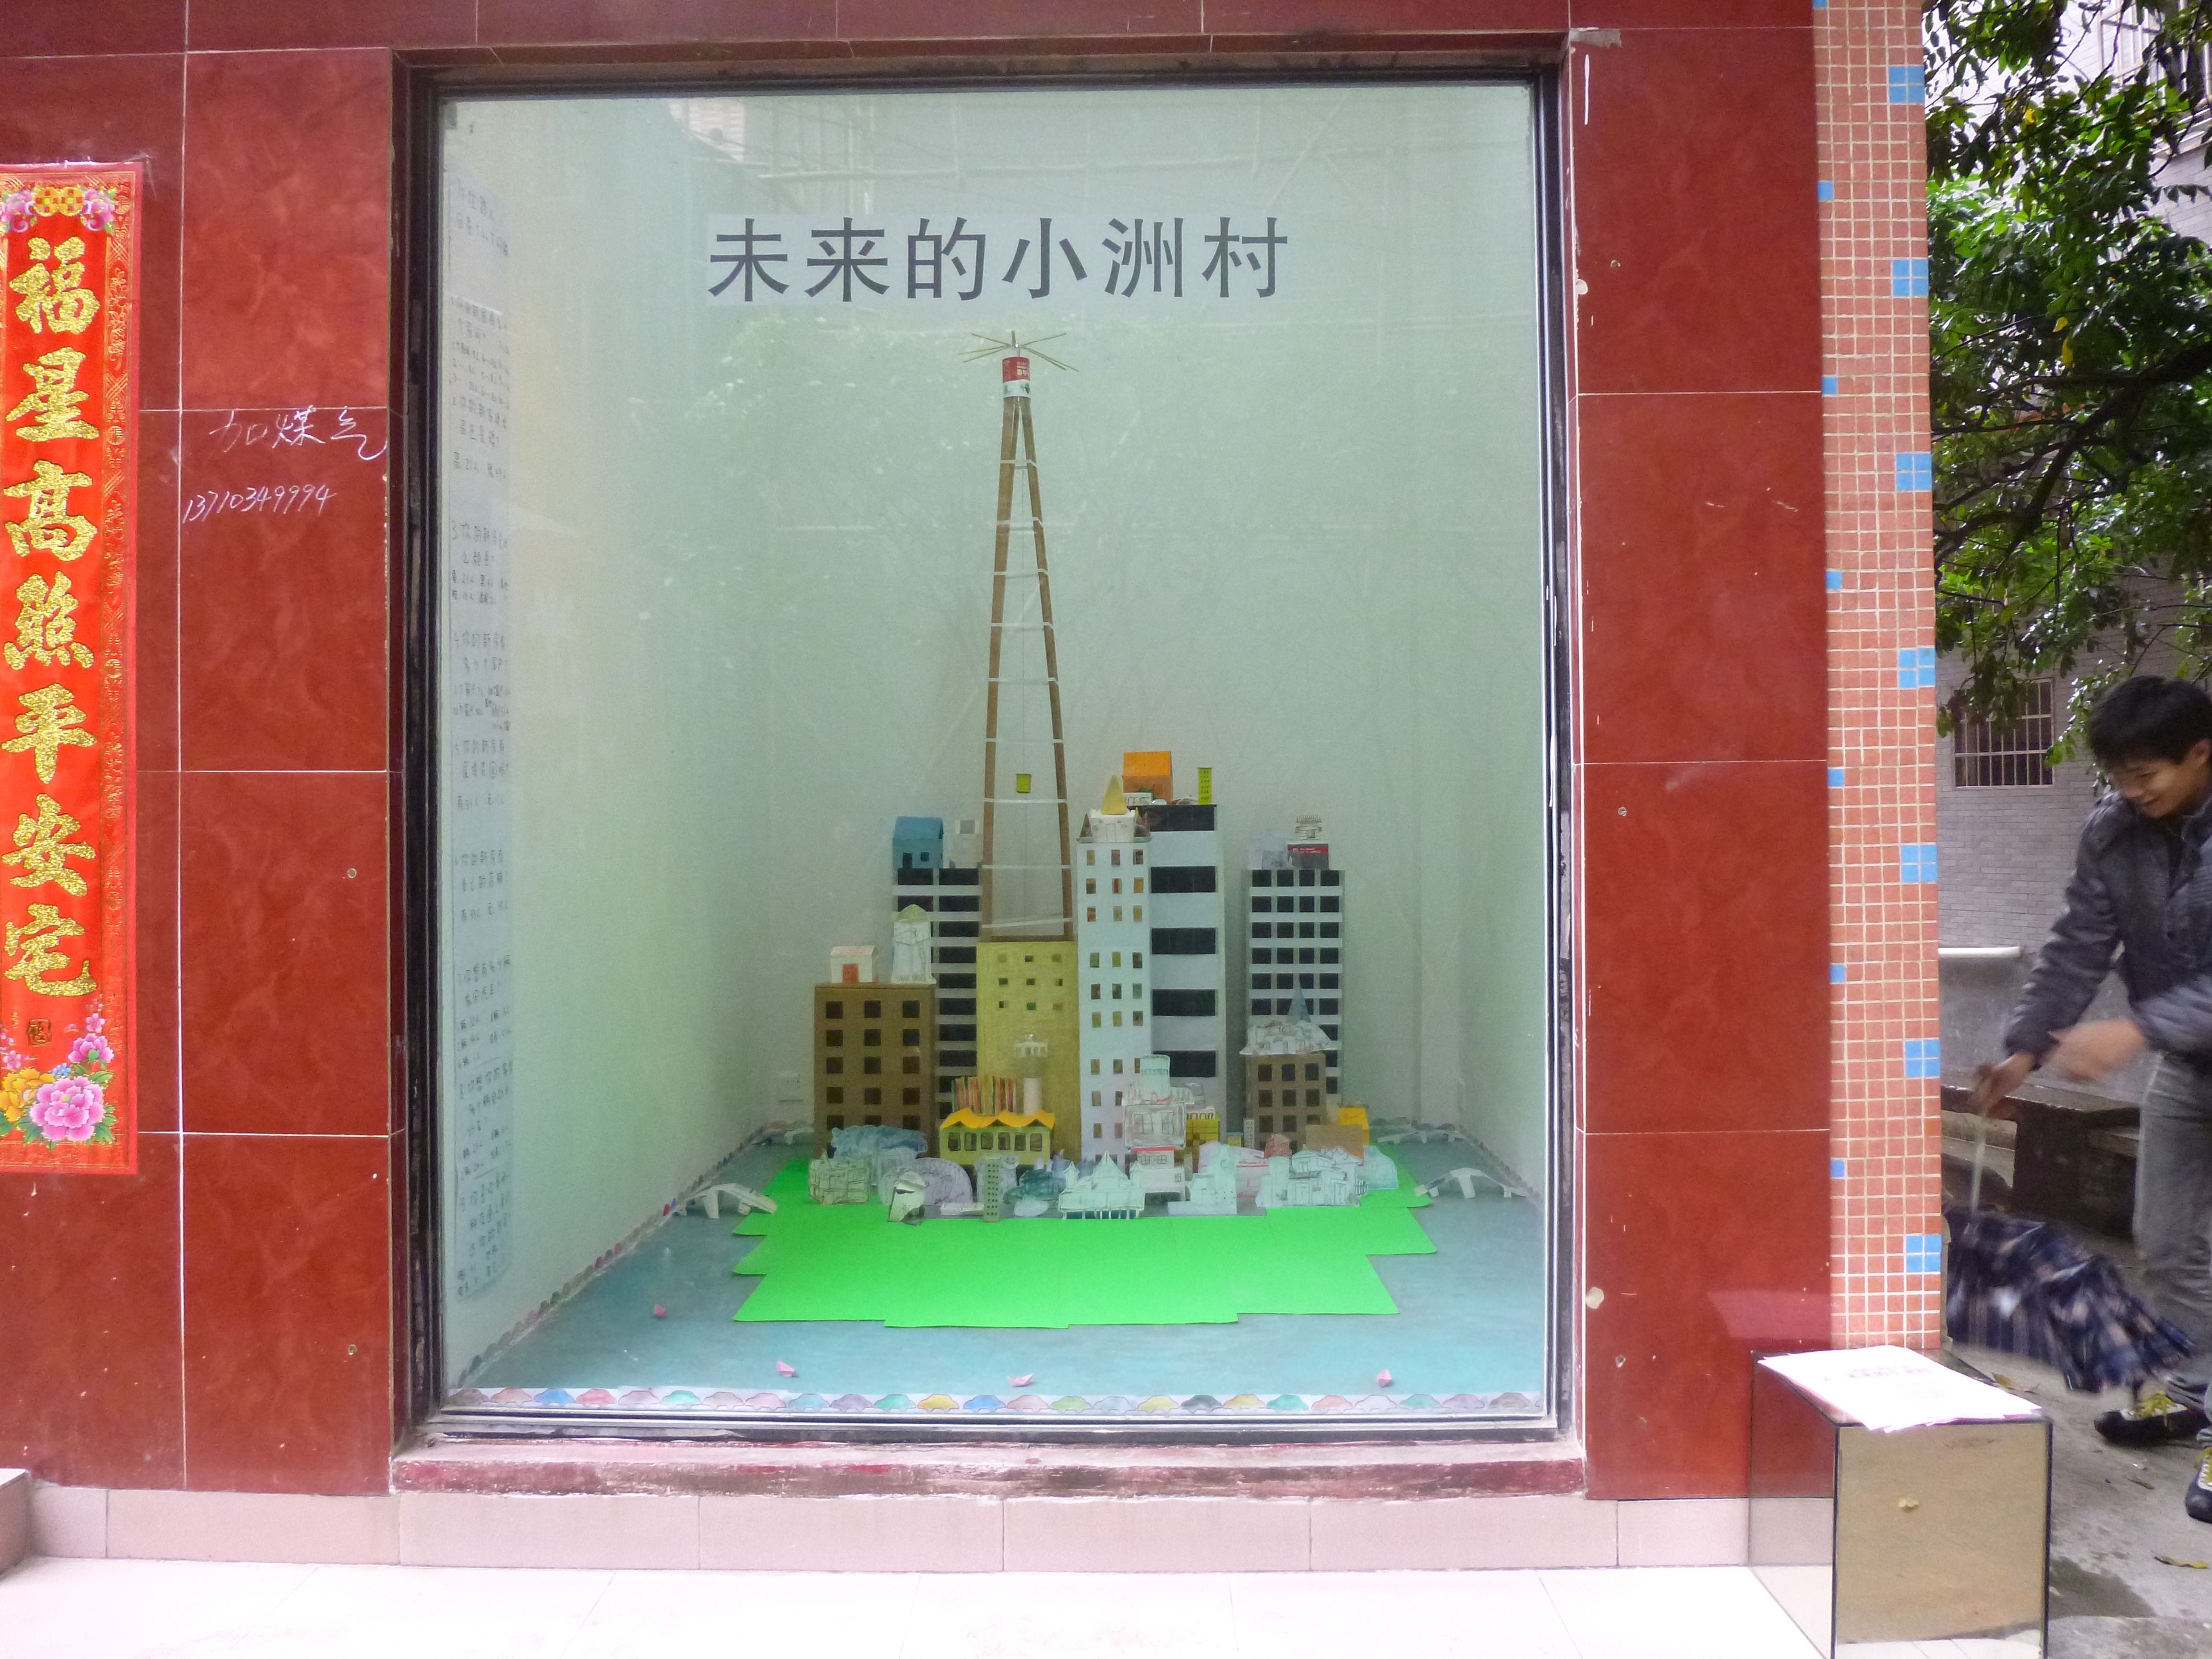 "German Small Lane" – Sabaki Art Space Guangzhou, China 2014